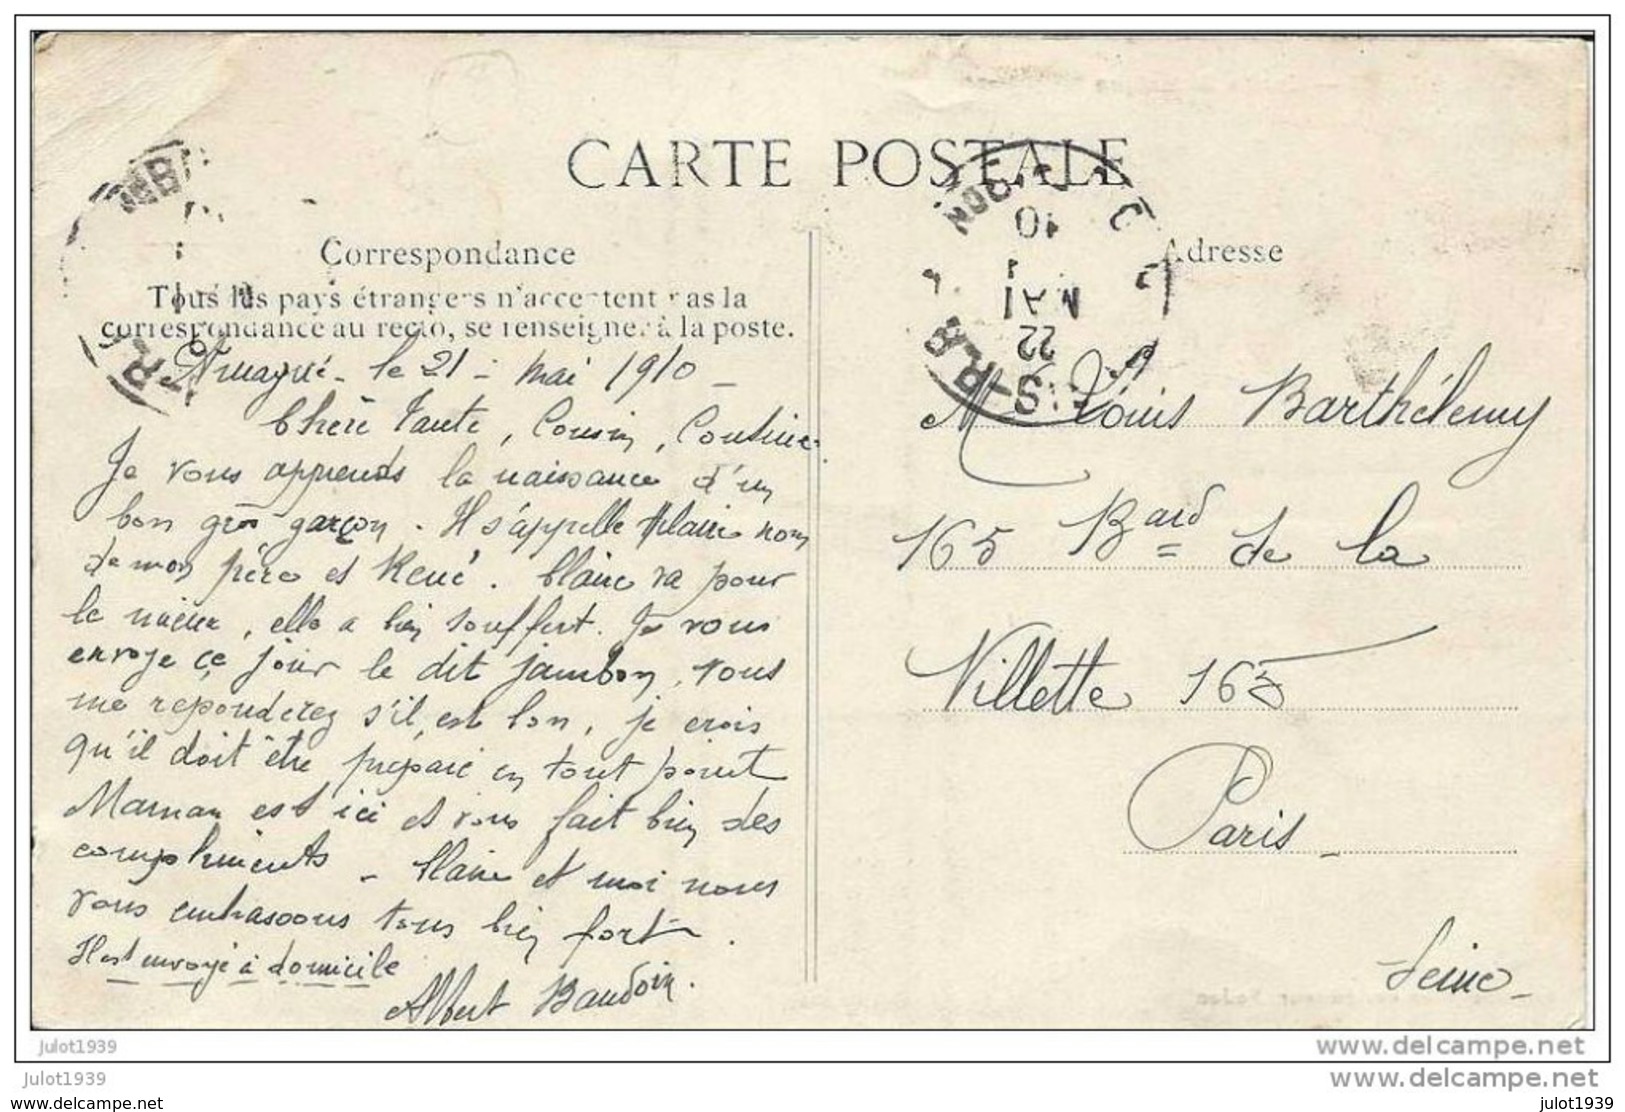 SEDAN ..-- 08 . Jardin Botanique . 1910 Vers PARIS Mr Louis BARTHELEMY ) . Voir Verso . - Sedan